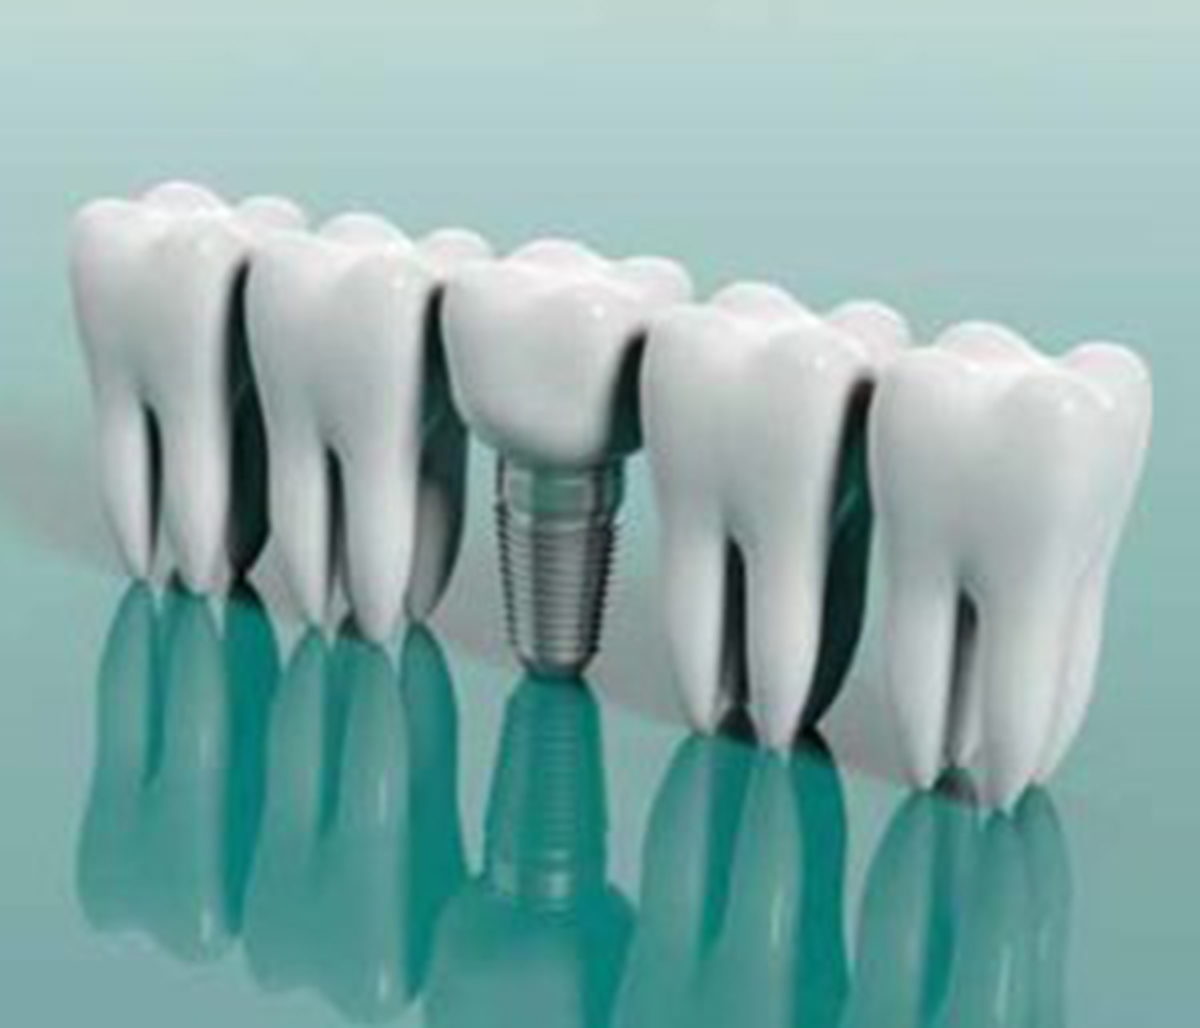 Professional dental implants from Maine Center for Dental Medicine in Skowhegan, ME permanently restore smiles.